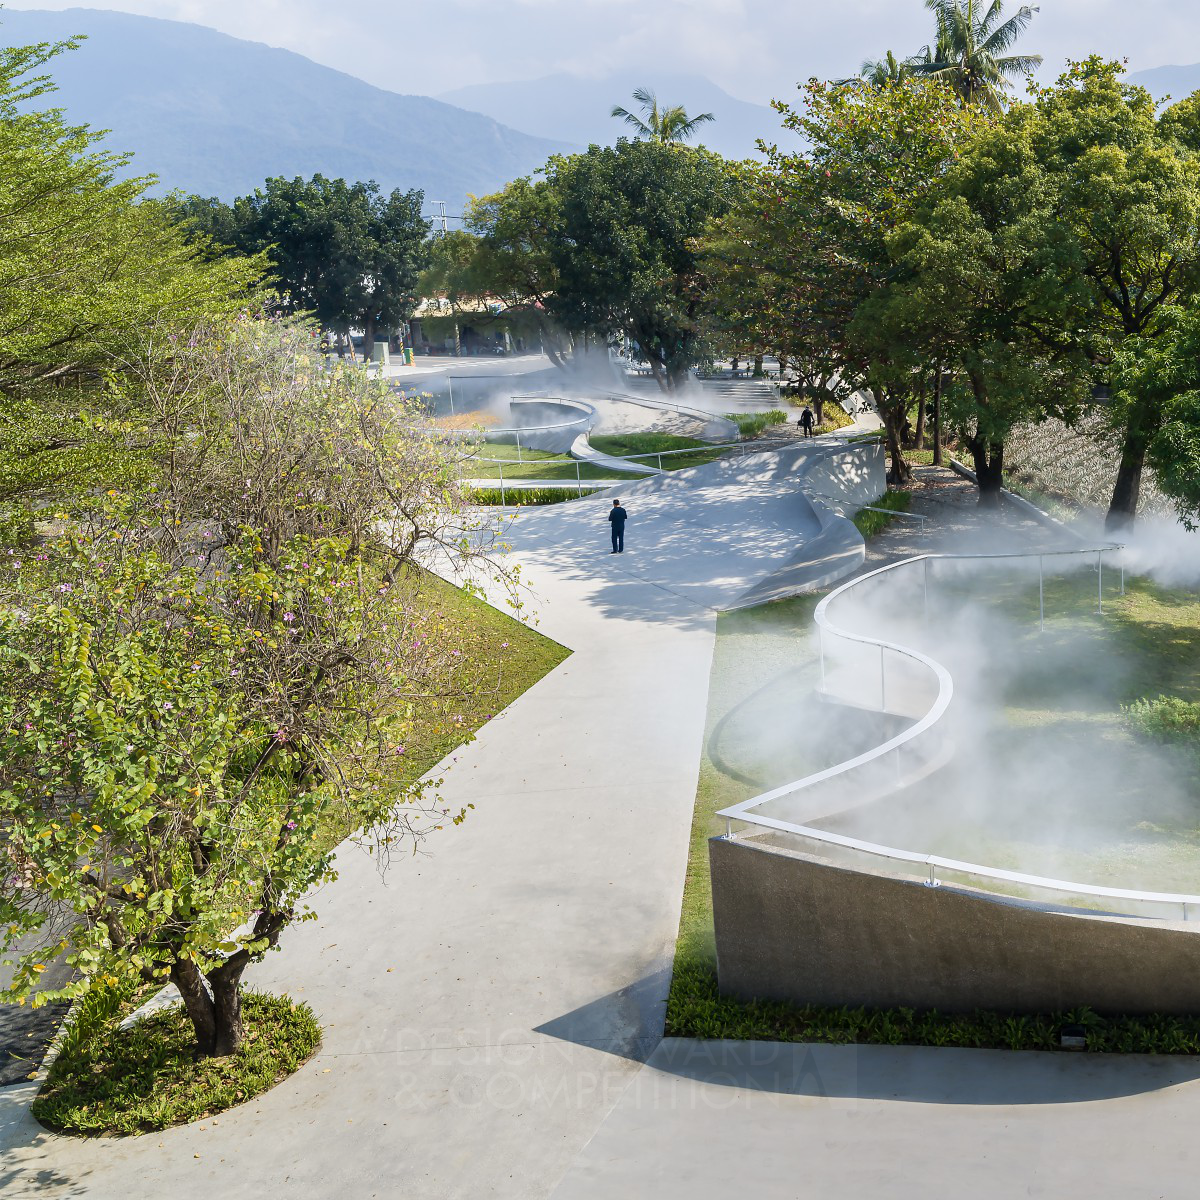 Men-An Pan wins Golden at the prestigious A' Landscape Planning and Garden Design Award with Nanhua Glimmer Public Landscape.